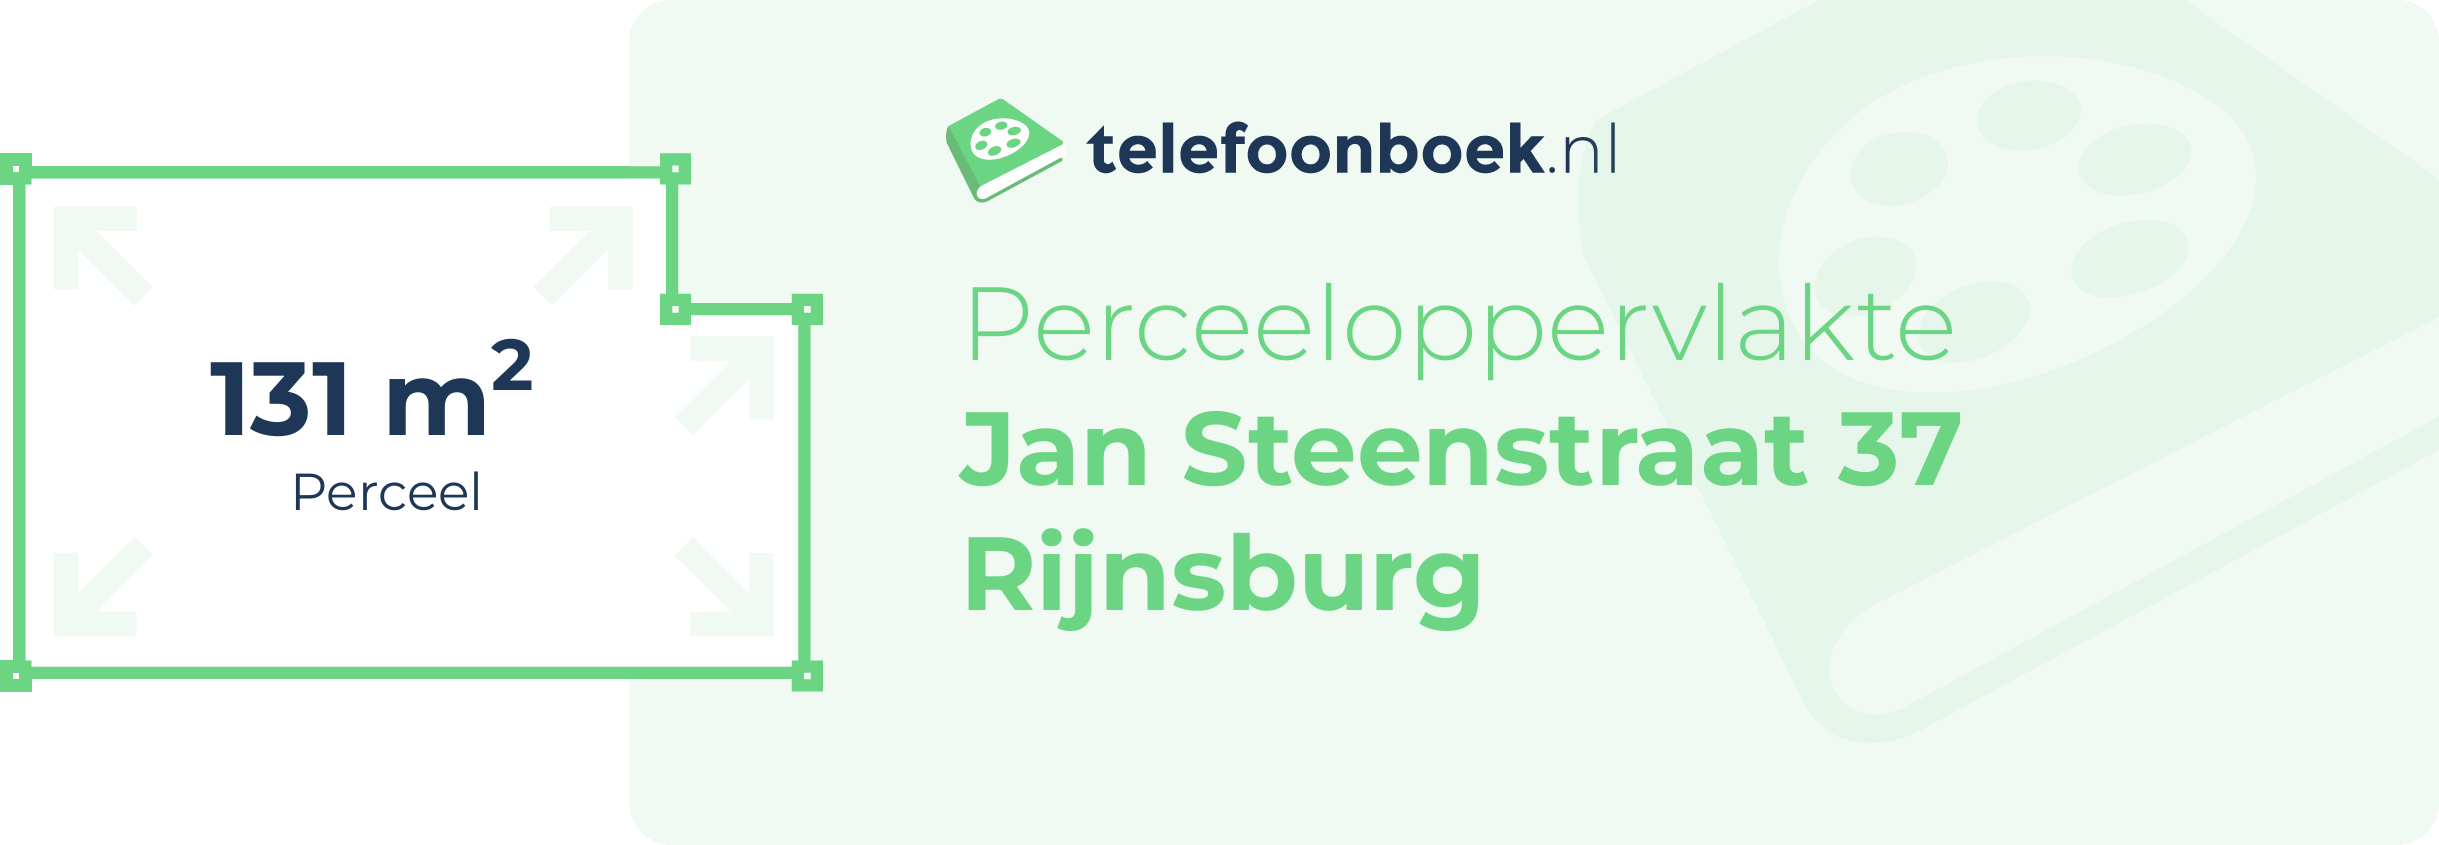 Perceeloppervlakte Jan Steenstraat 37 Rijnsburg